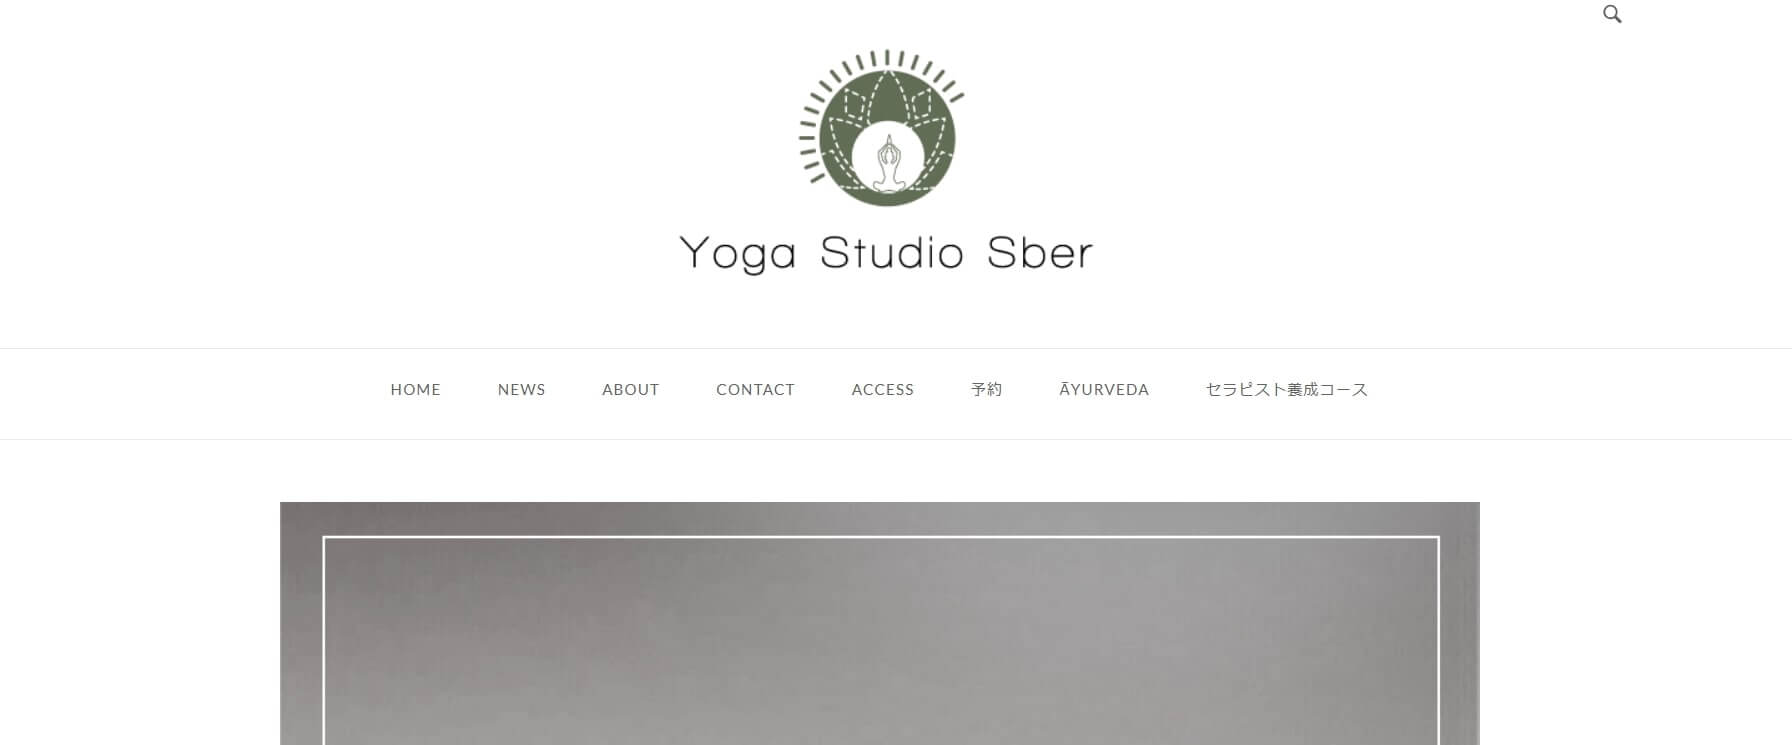 Yoga Studio Sber